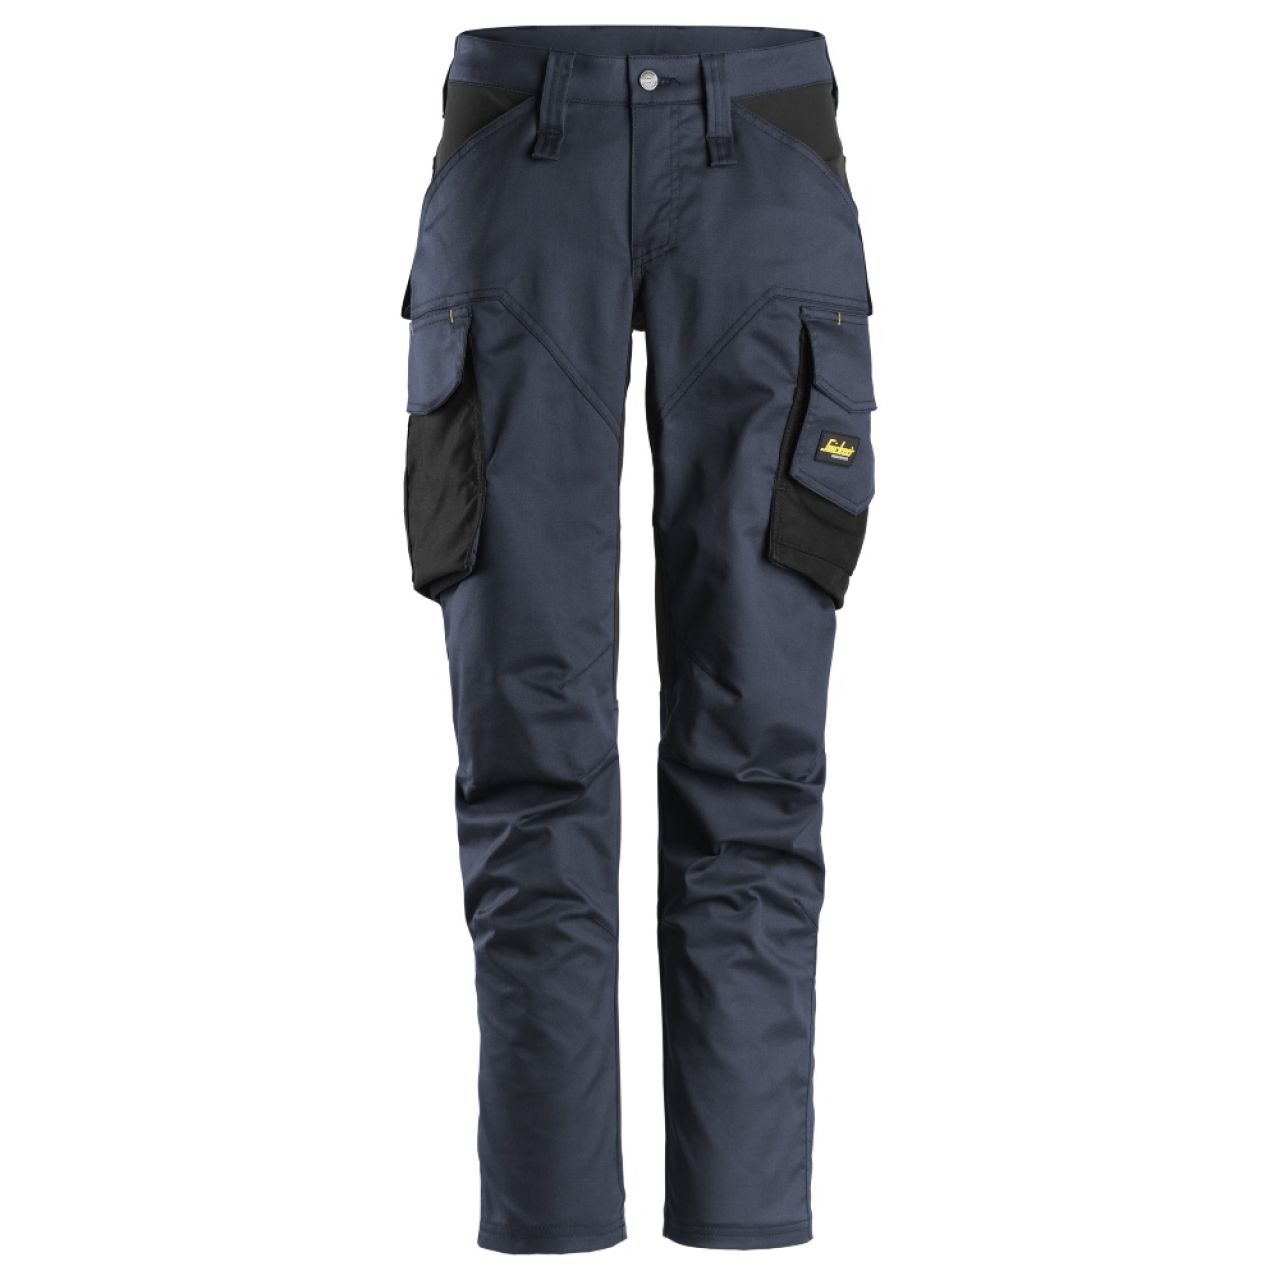 6703 Pantalones largos de trabajo elásticos para mujer con bolsillos para rodilleras AllroundWork azul marino-negro talla 84